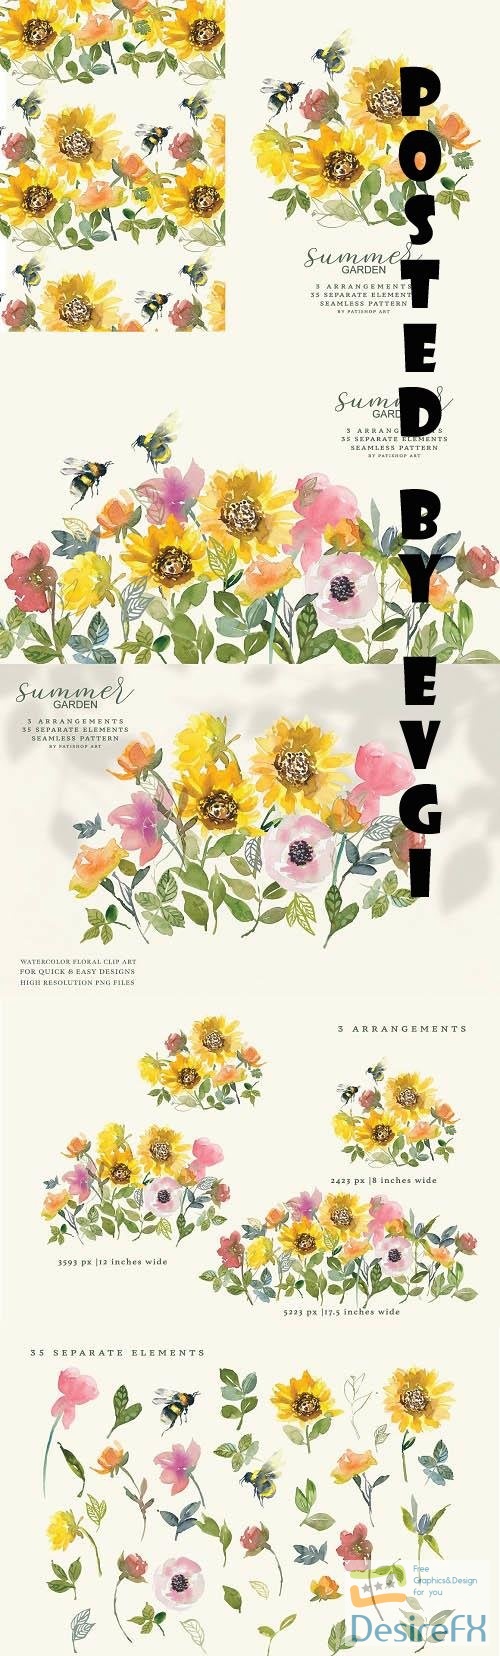 Watercolor Sunflower Clipart Set - 6235056